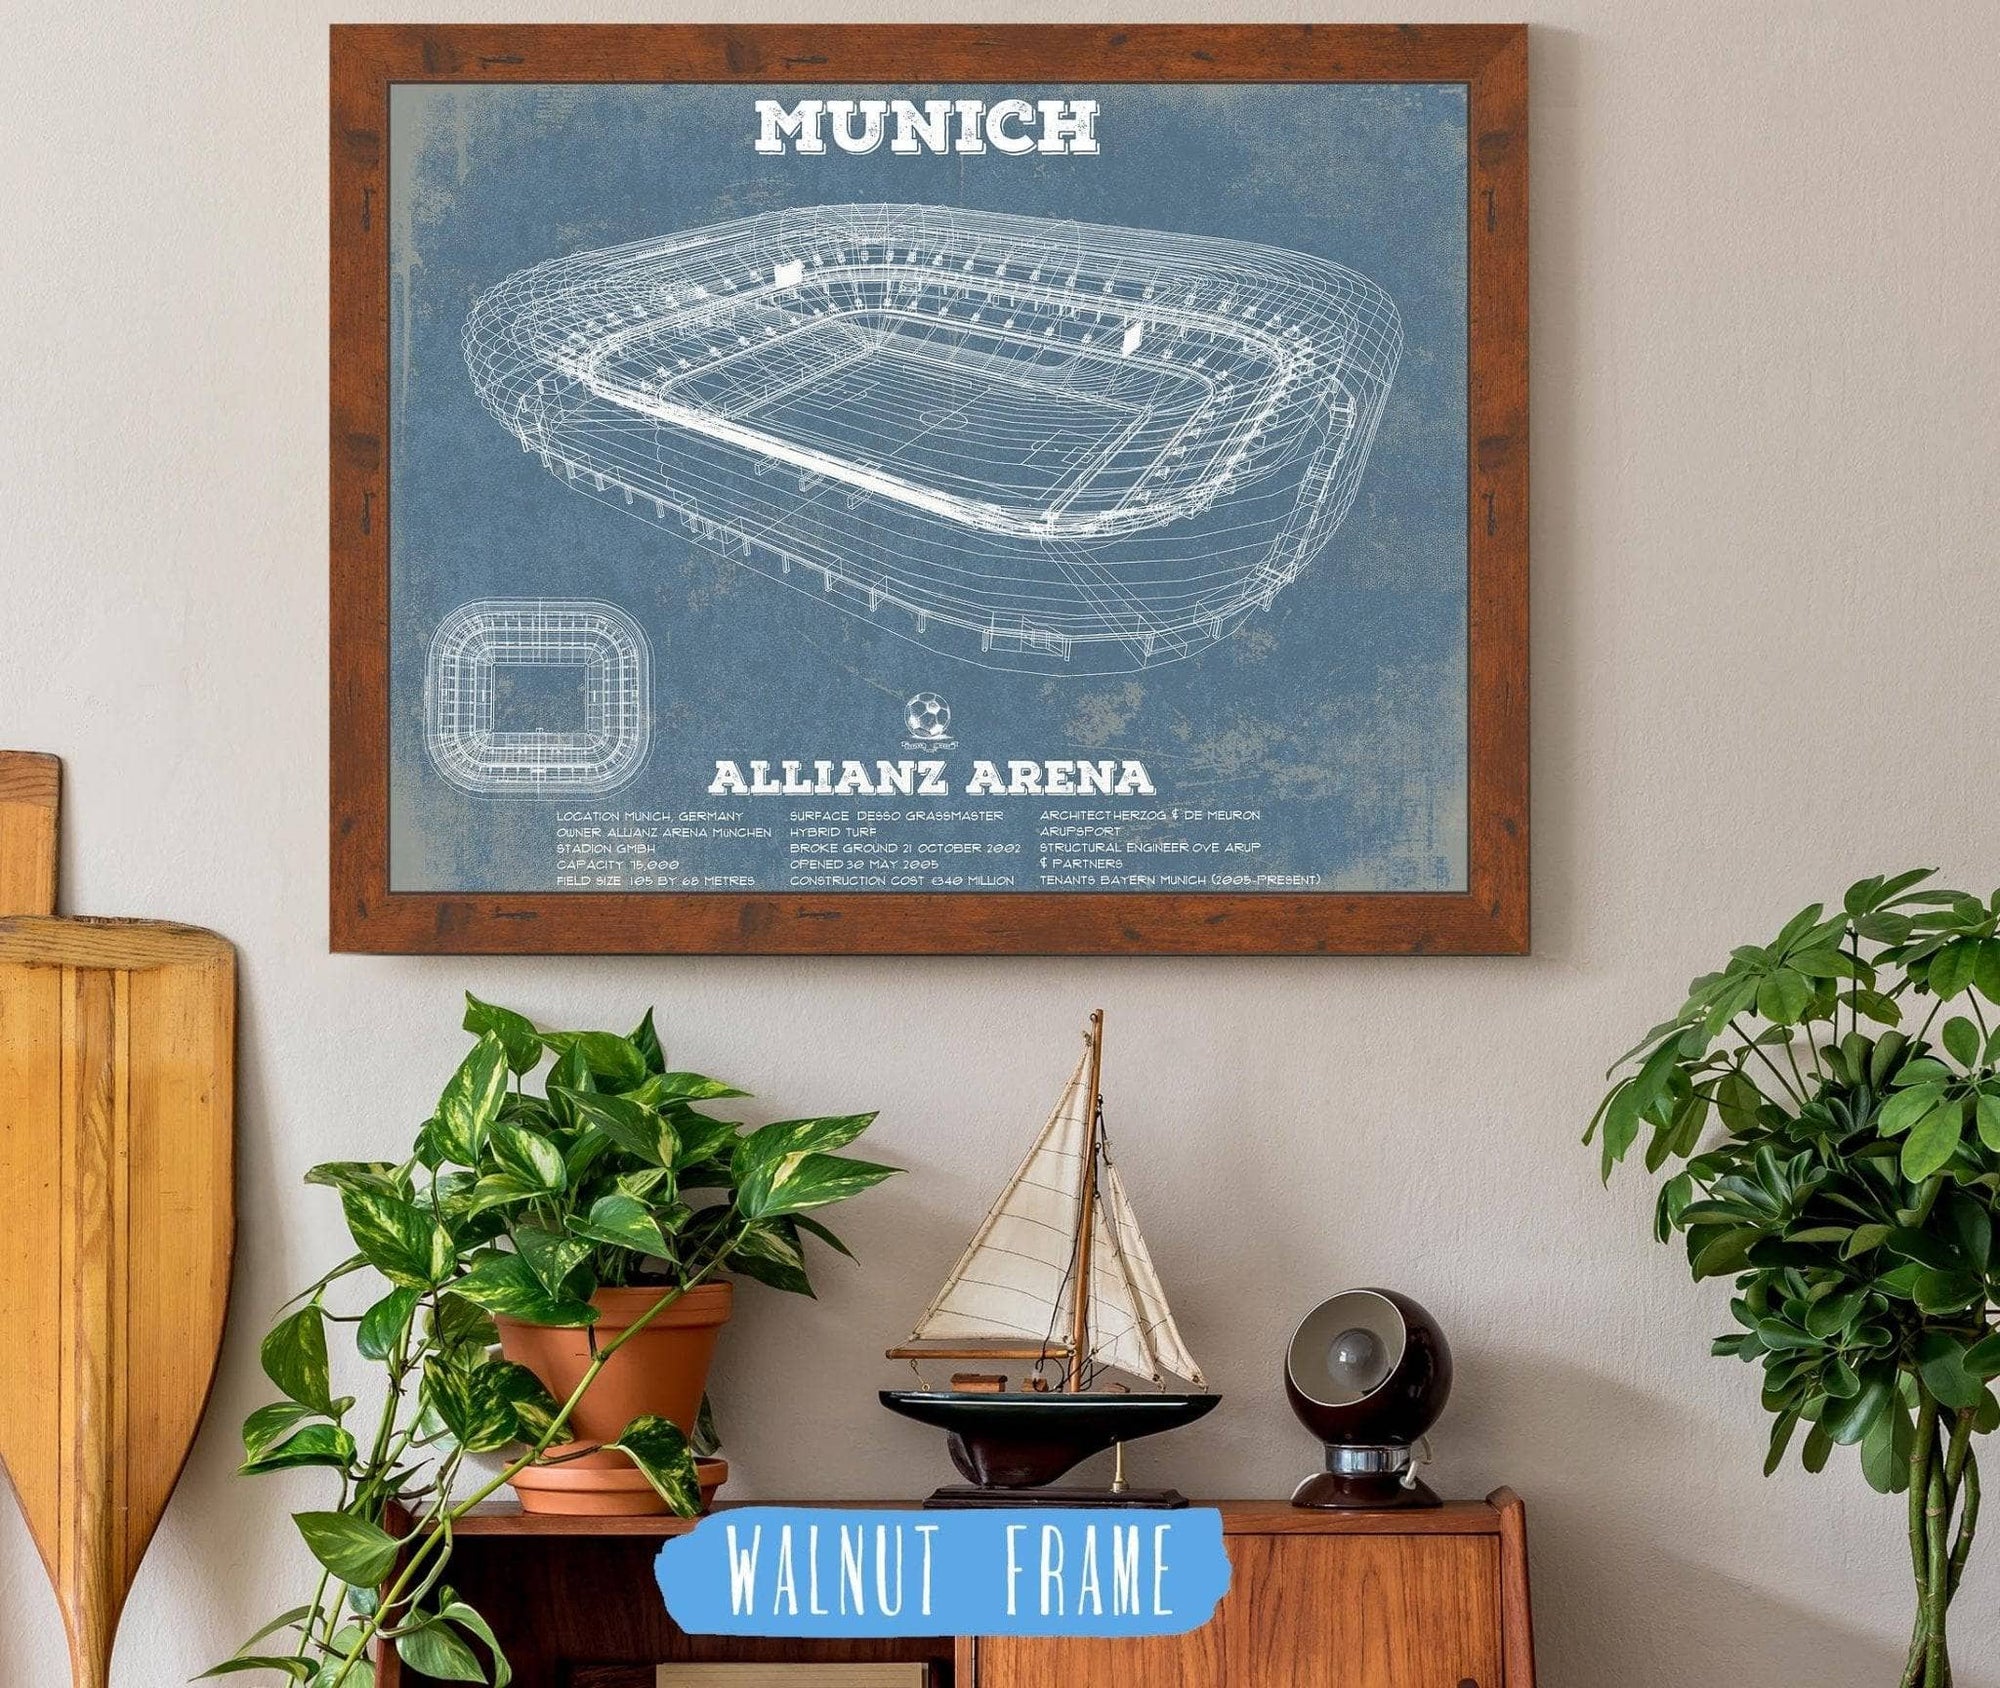 Cutler West Soccer Collection 14" x 11" / Walnut Frame Bayern Munich FC Vintage Allianz Arena Soccer Print 736980126_50588